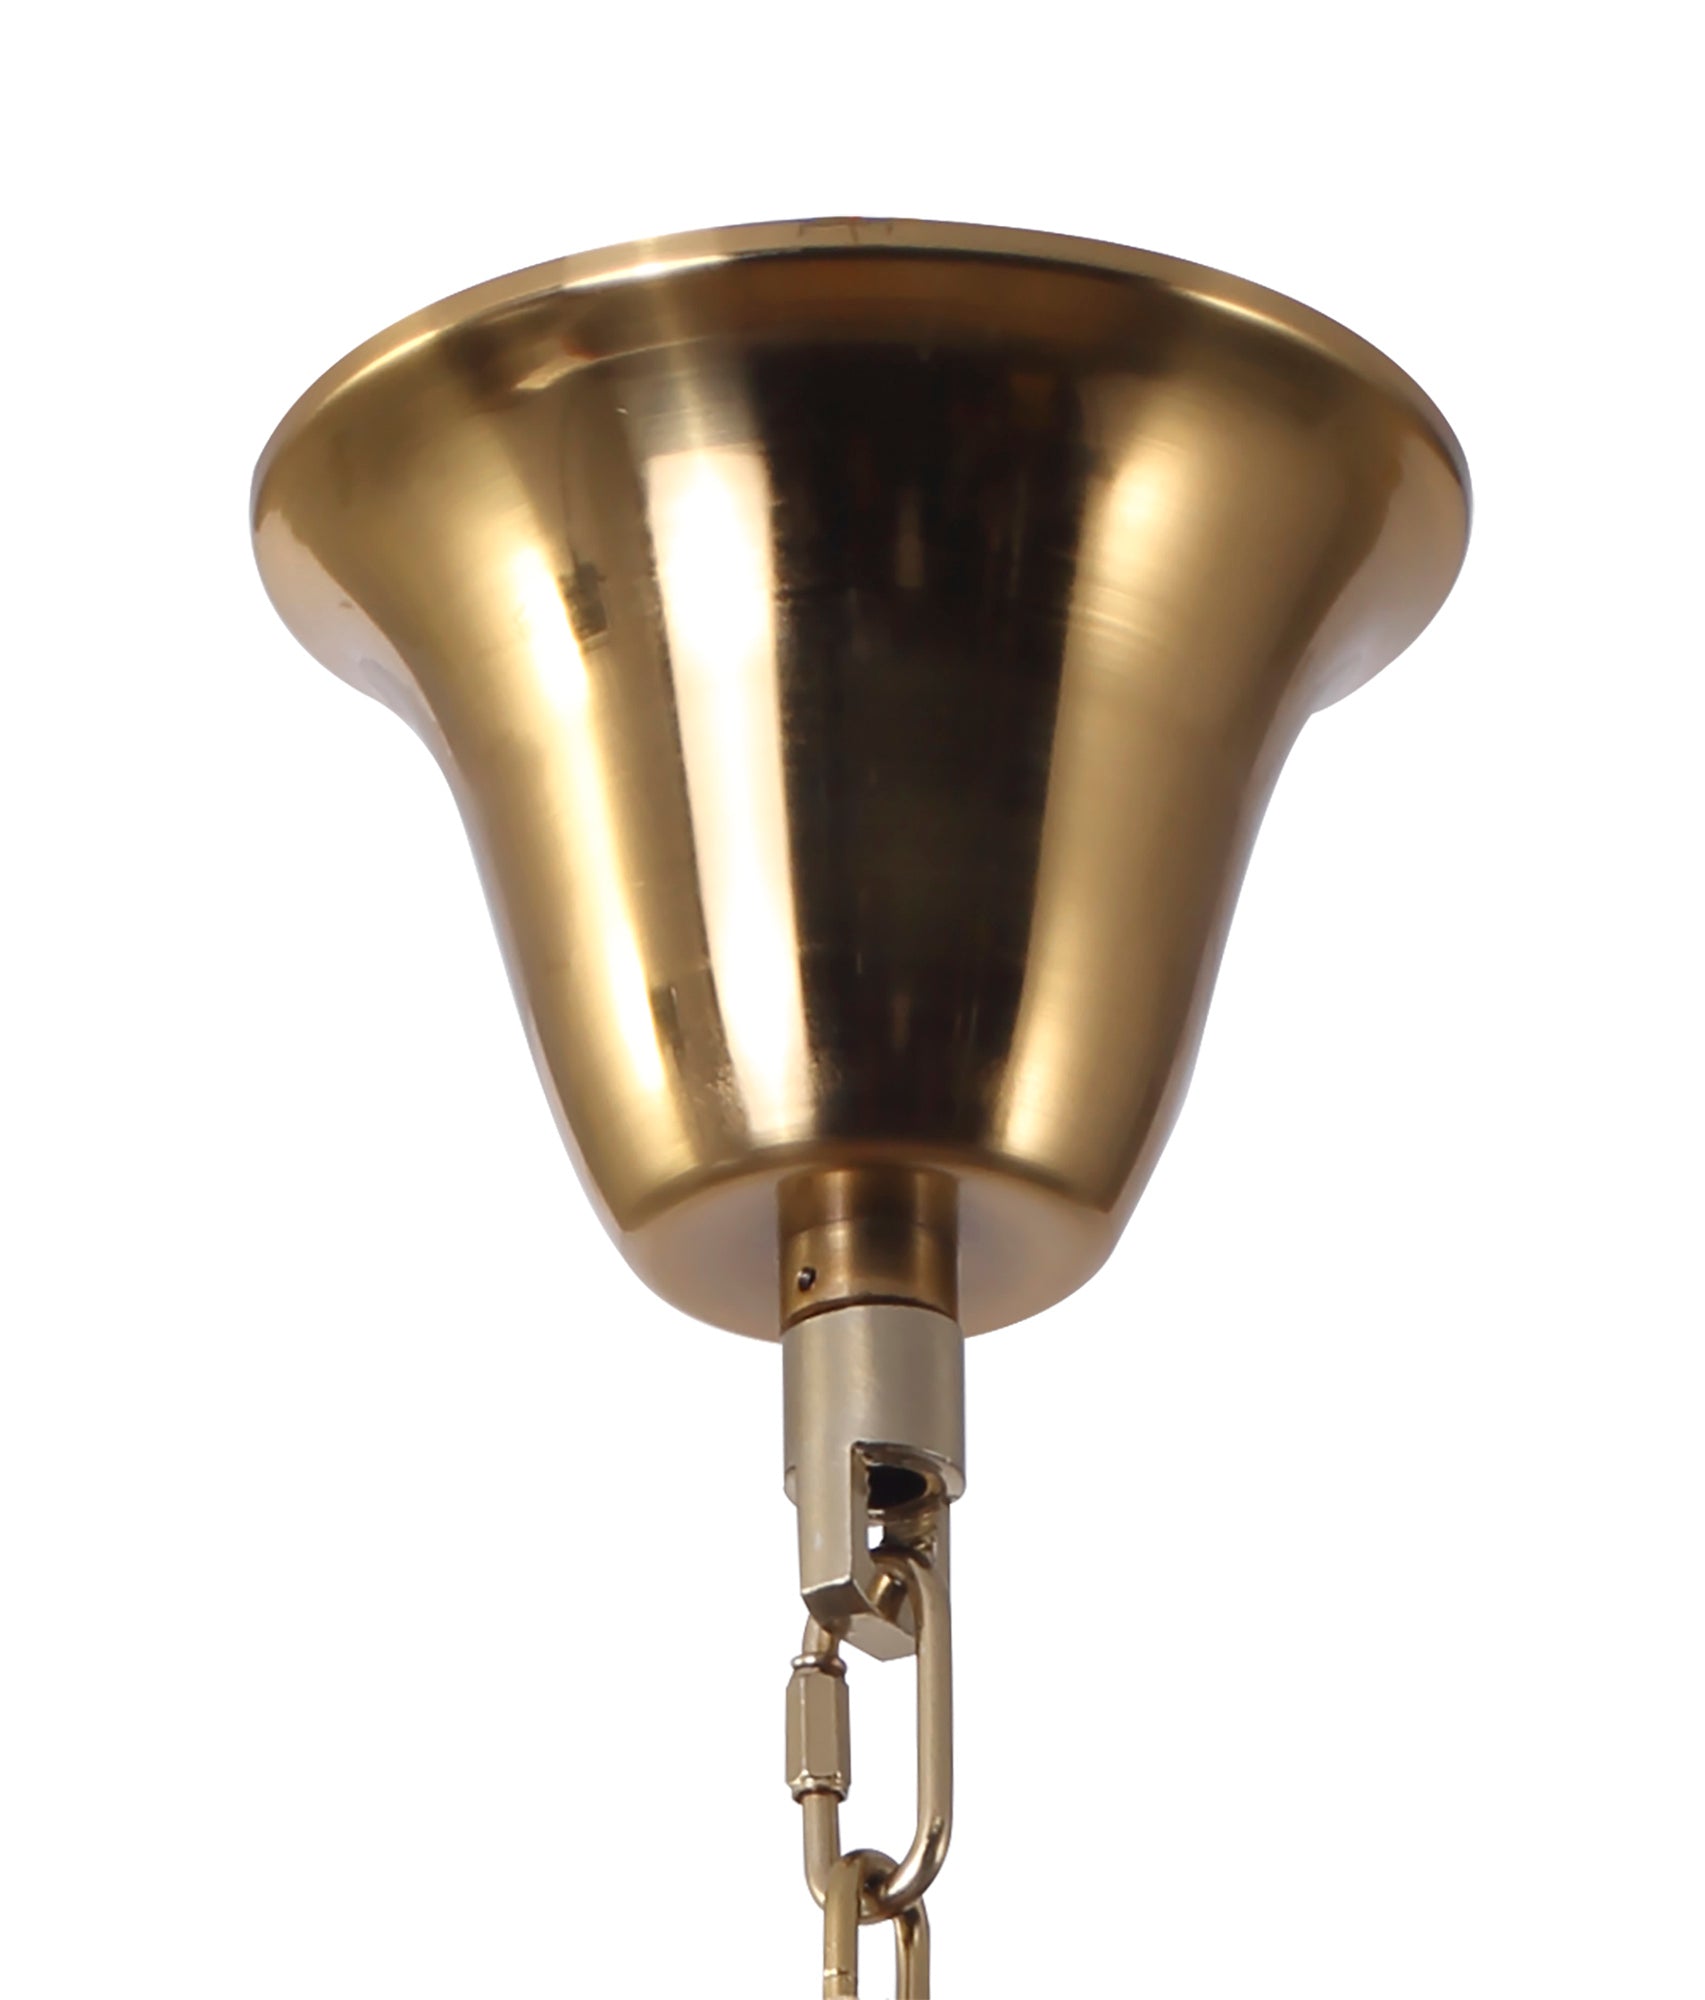 Knightsbridge Pendant Round 5 Tier 18 Light E14, Brass/Clear Glass - LO182303. Item Weight: 30.2kg